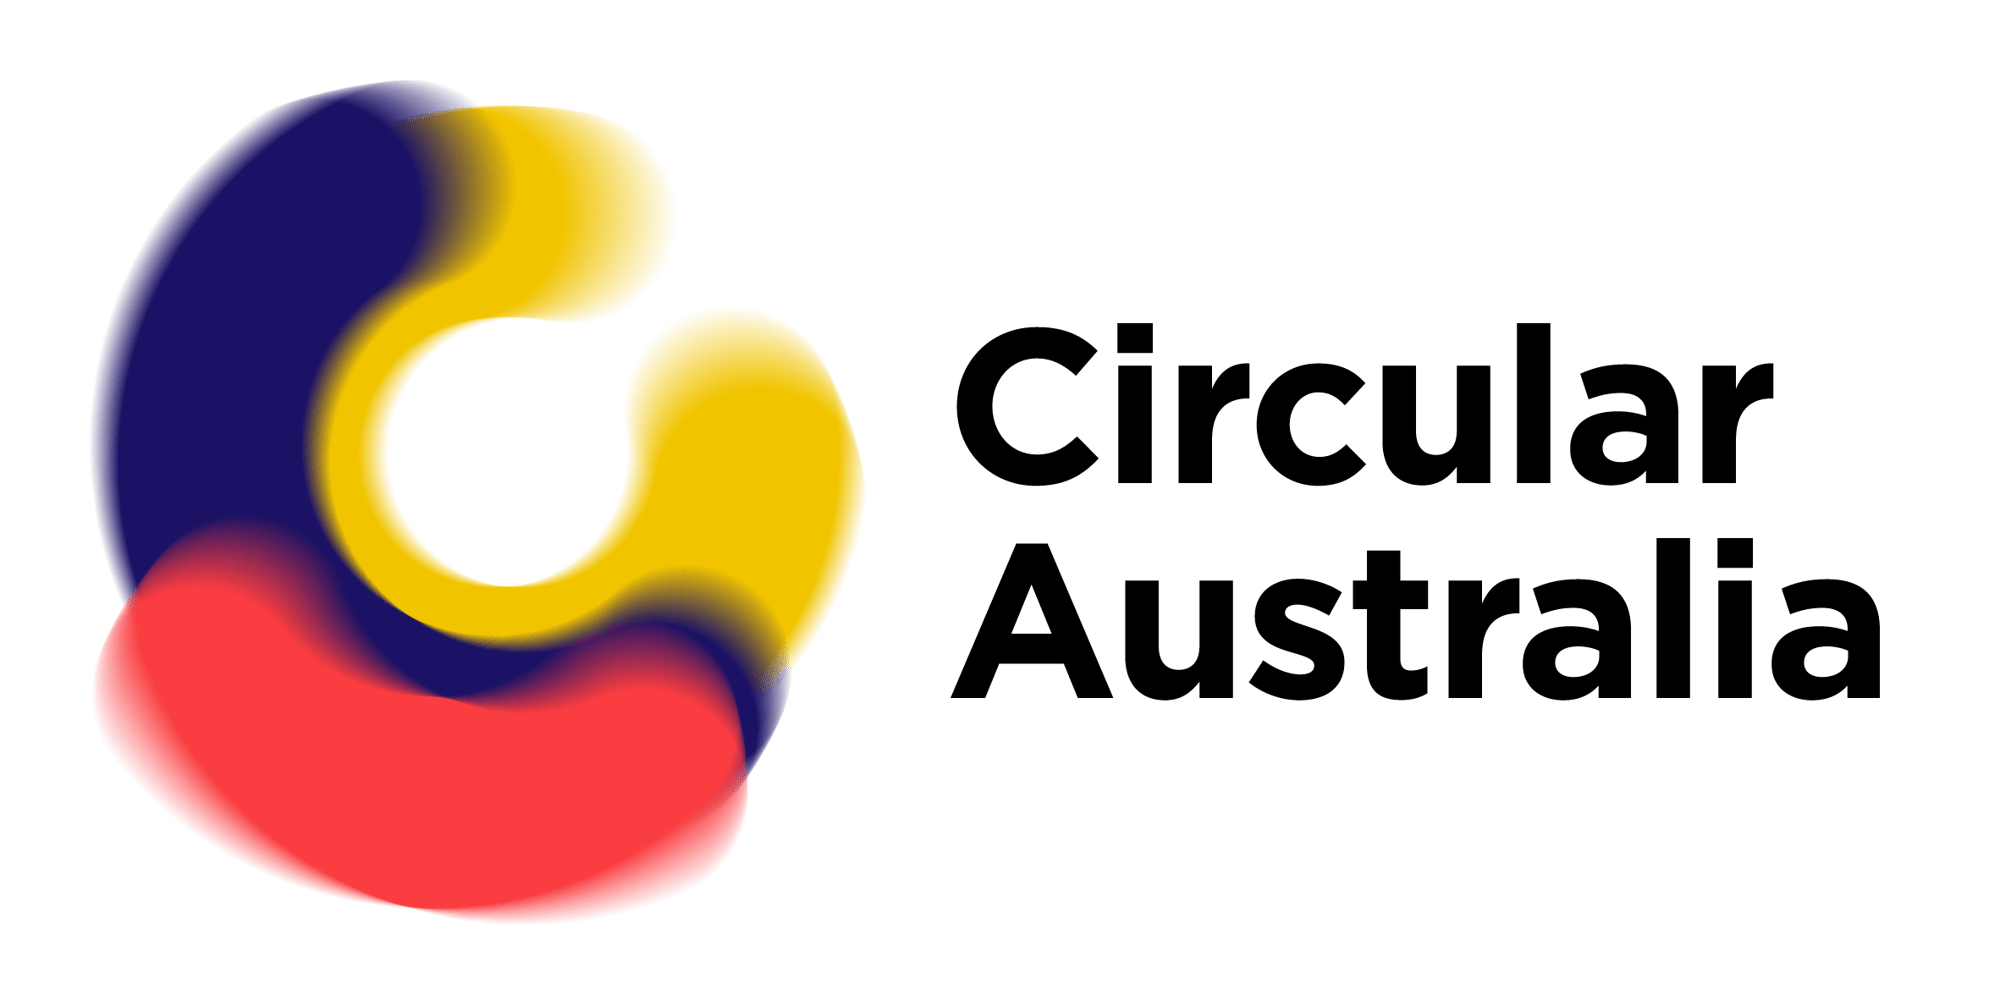 Circular Australia